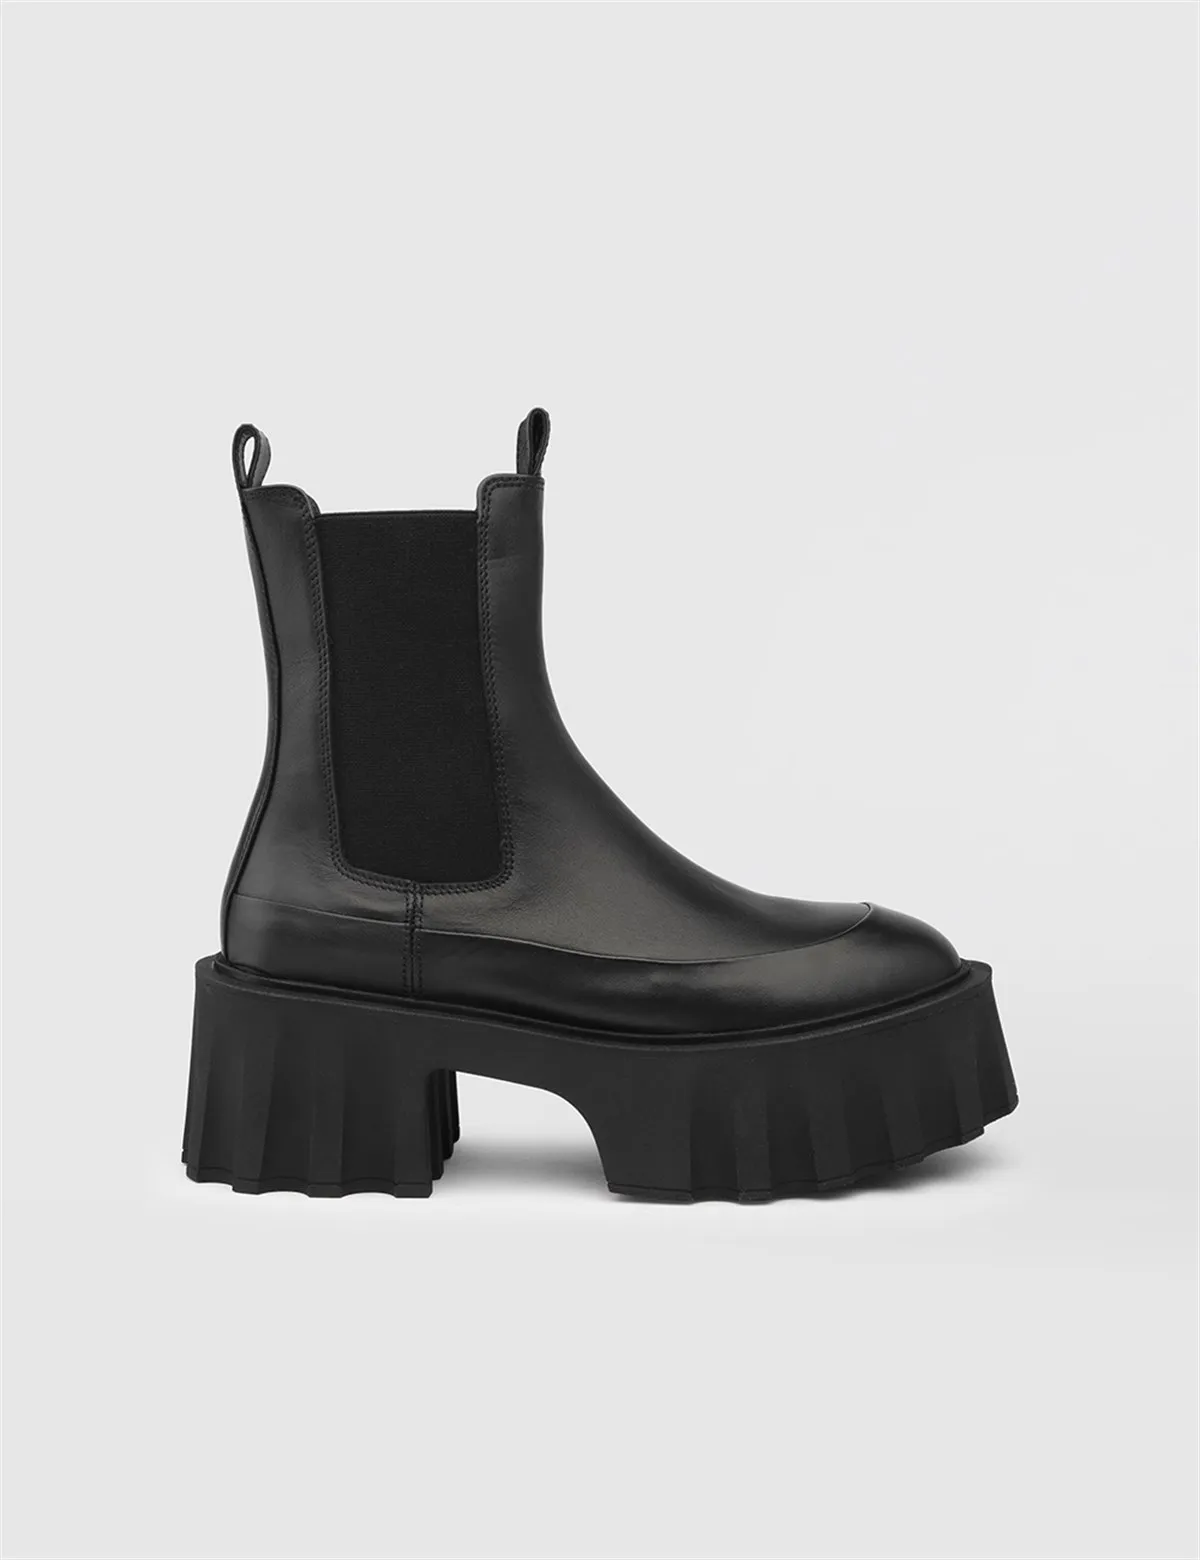 

ILVi-Genuine Leather Handmade Claas Black Boot Women's Shoes 2022 Fall/Winter